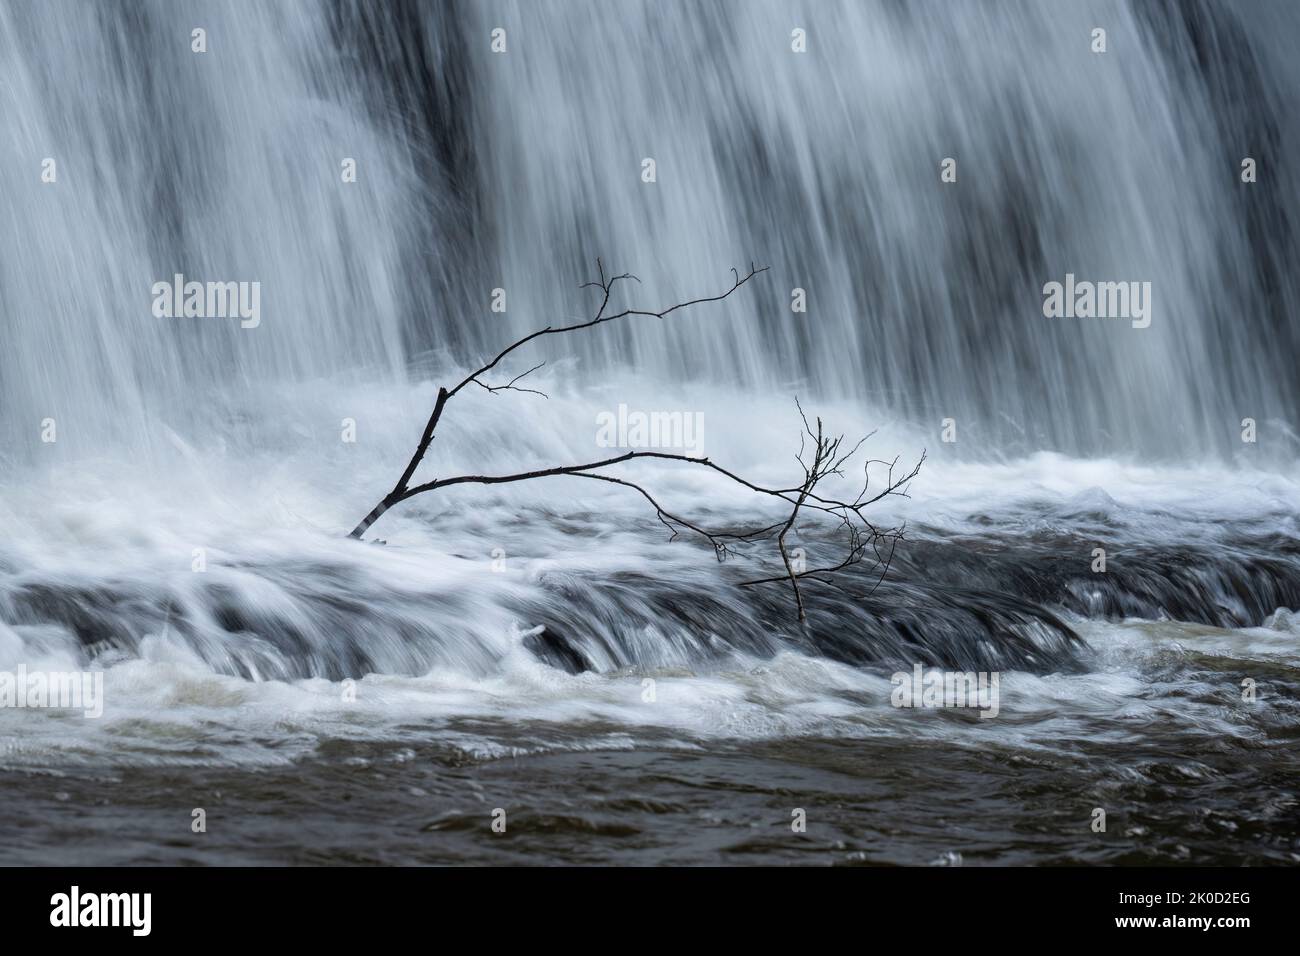 A tree branch among gushing waters of Purakaunui Falls, Catlins, South Island. Stock Photo